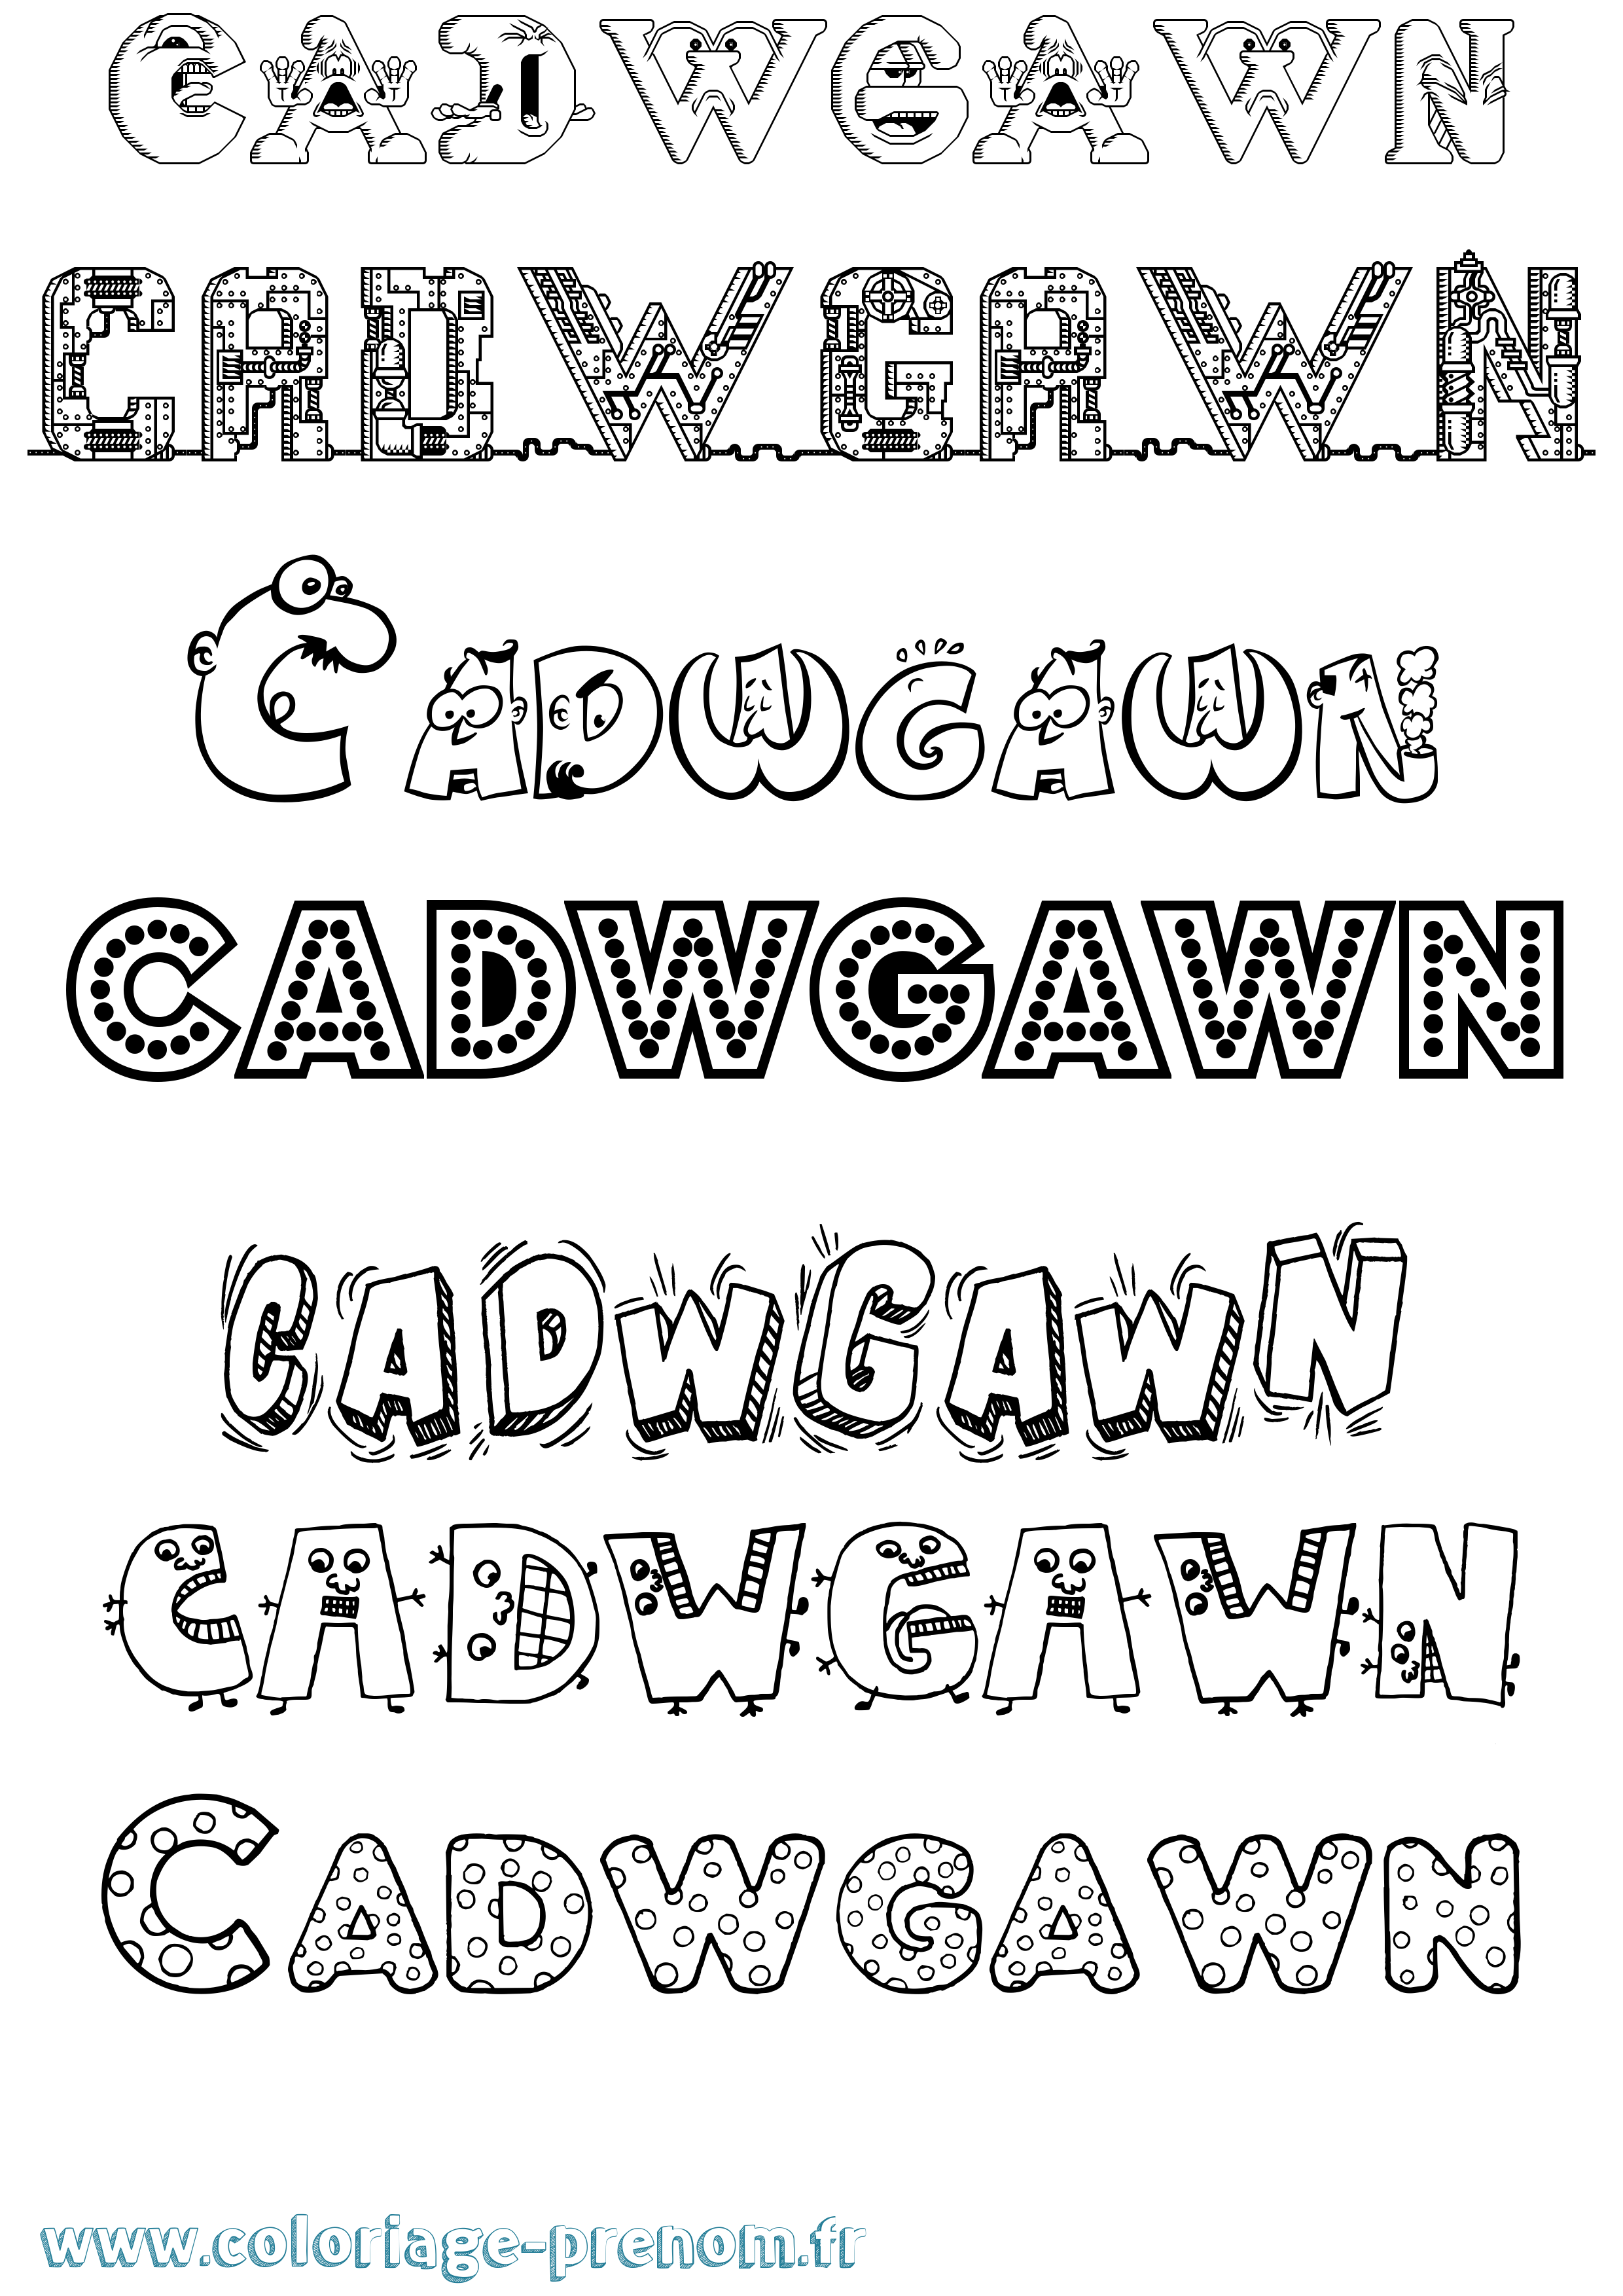 Coloriage prénom Cadwgawn Fun